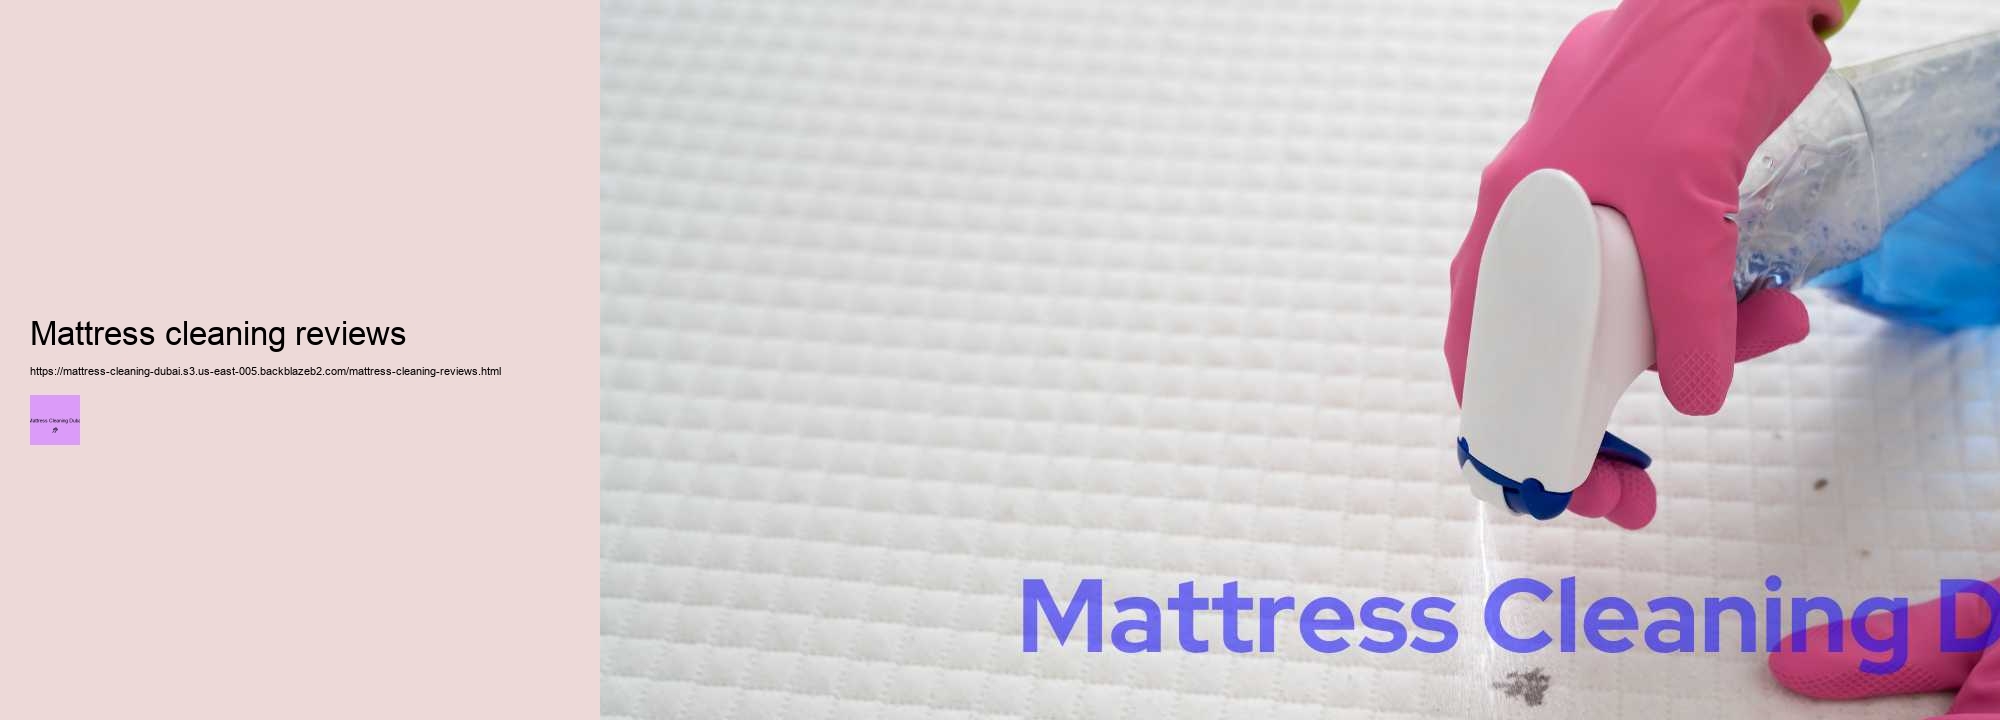 Mattress cleaning reviews